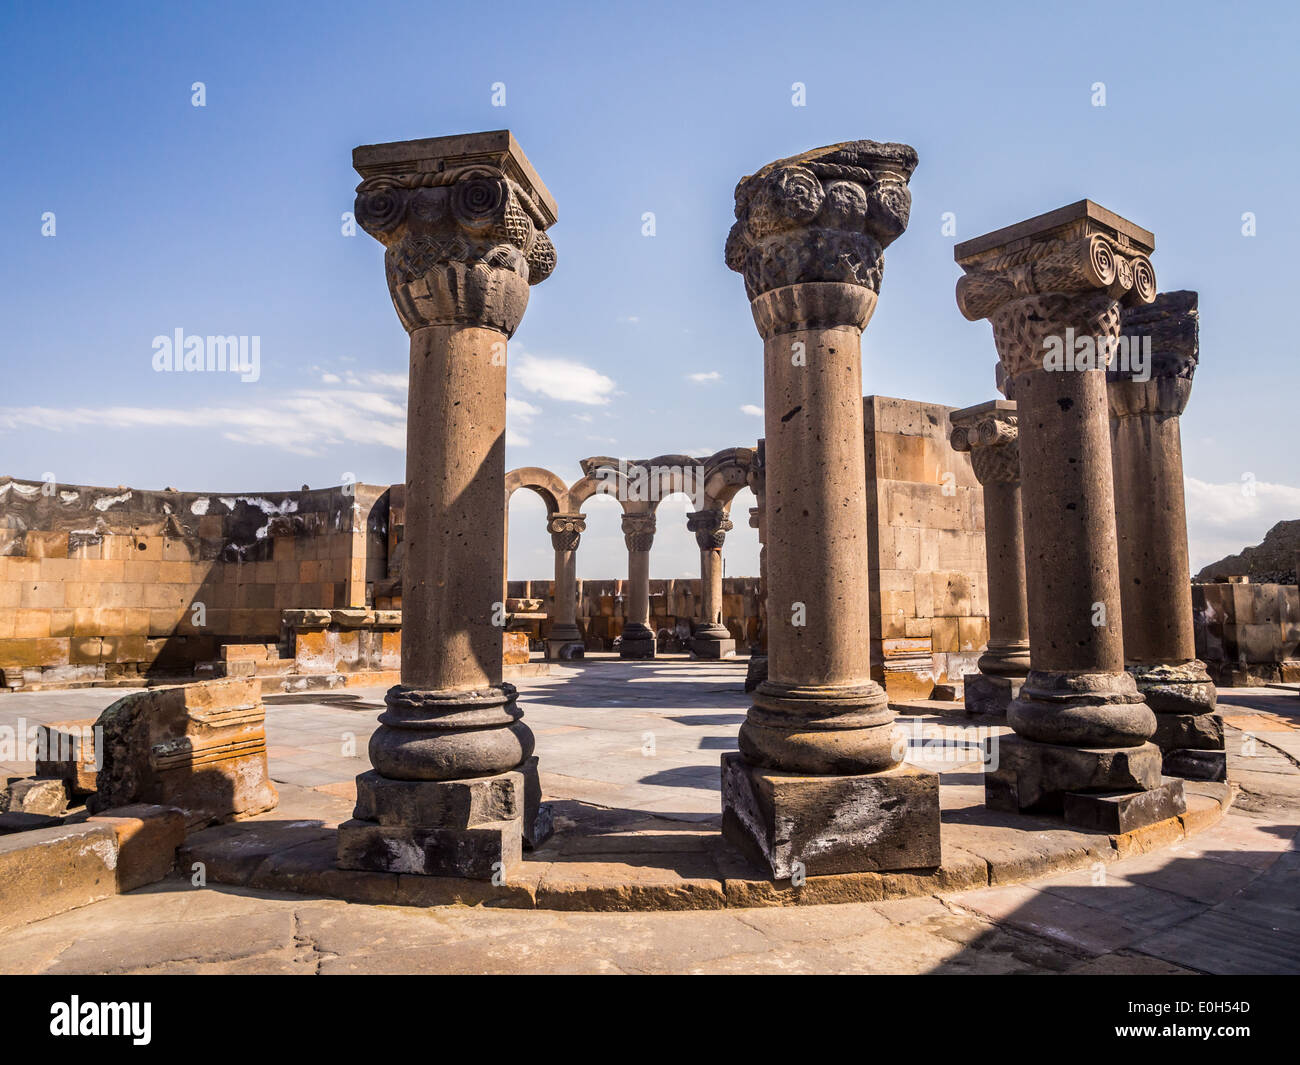 Ruins of the Zvartnots Cathedral in Armenia. Stock Photo